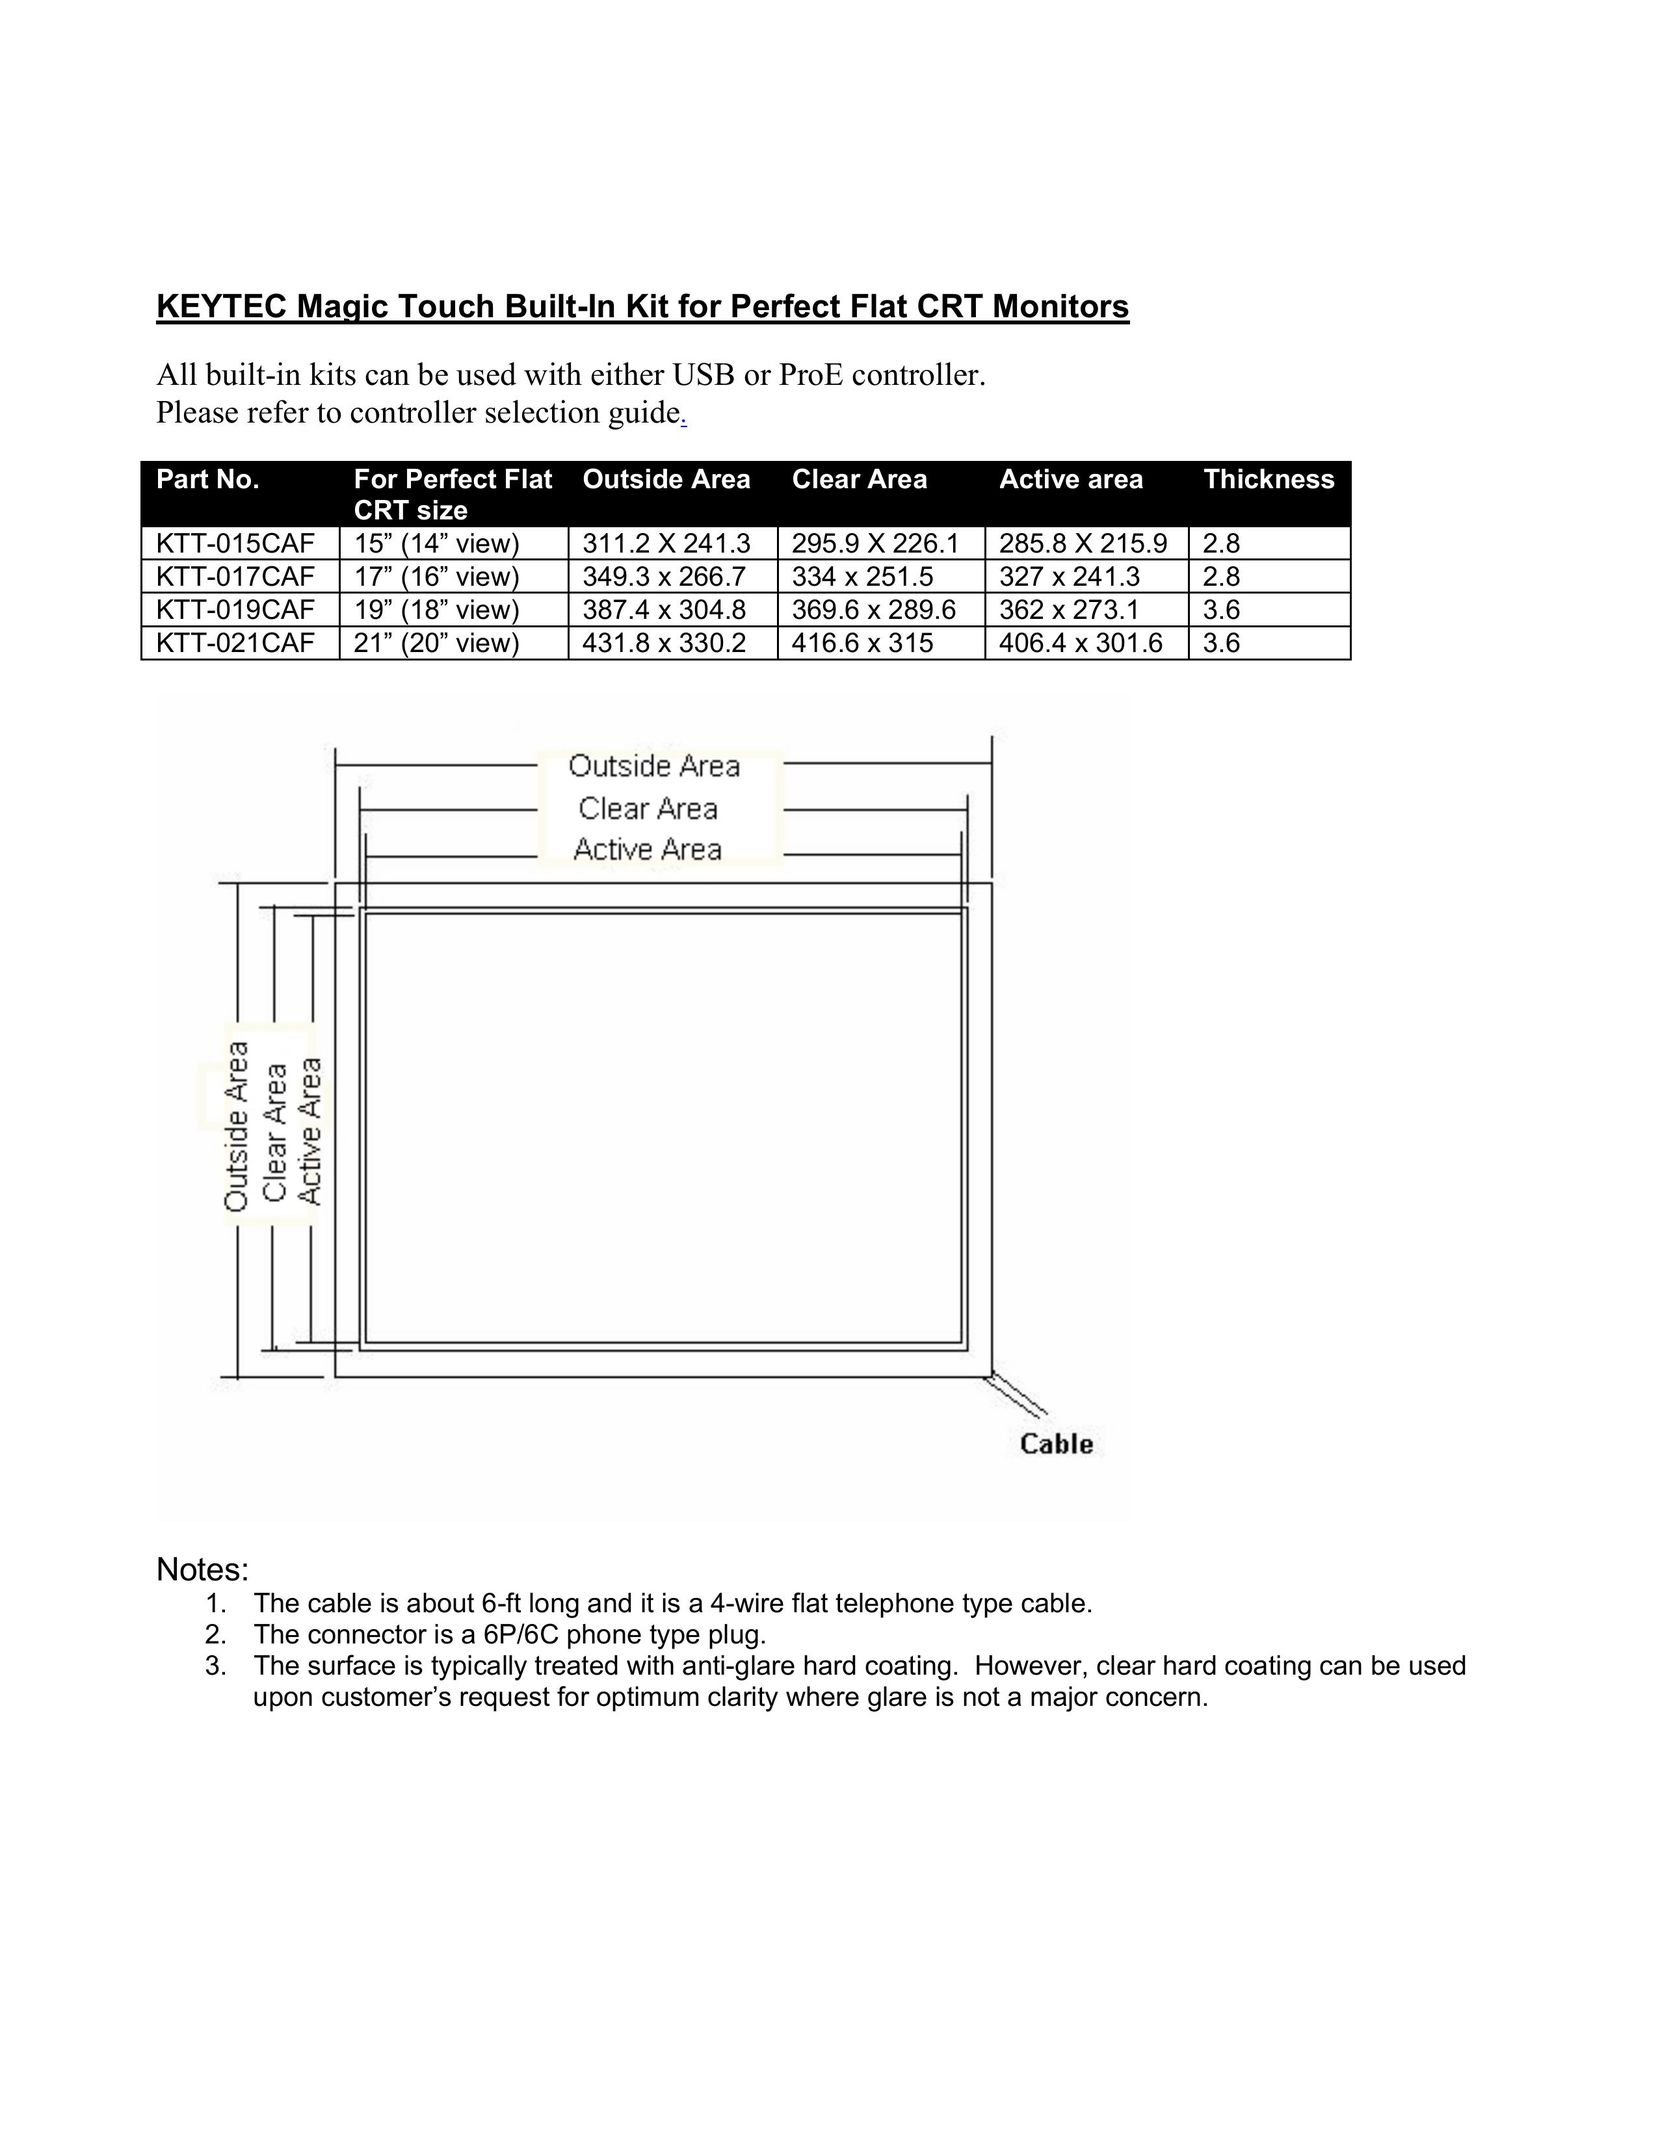 Keytec KTT-017CAF Computer Monitor User Manual